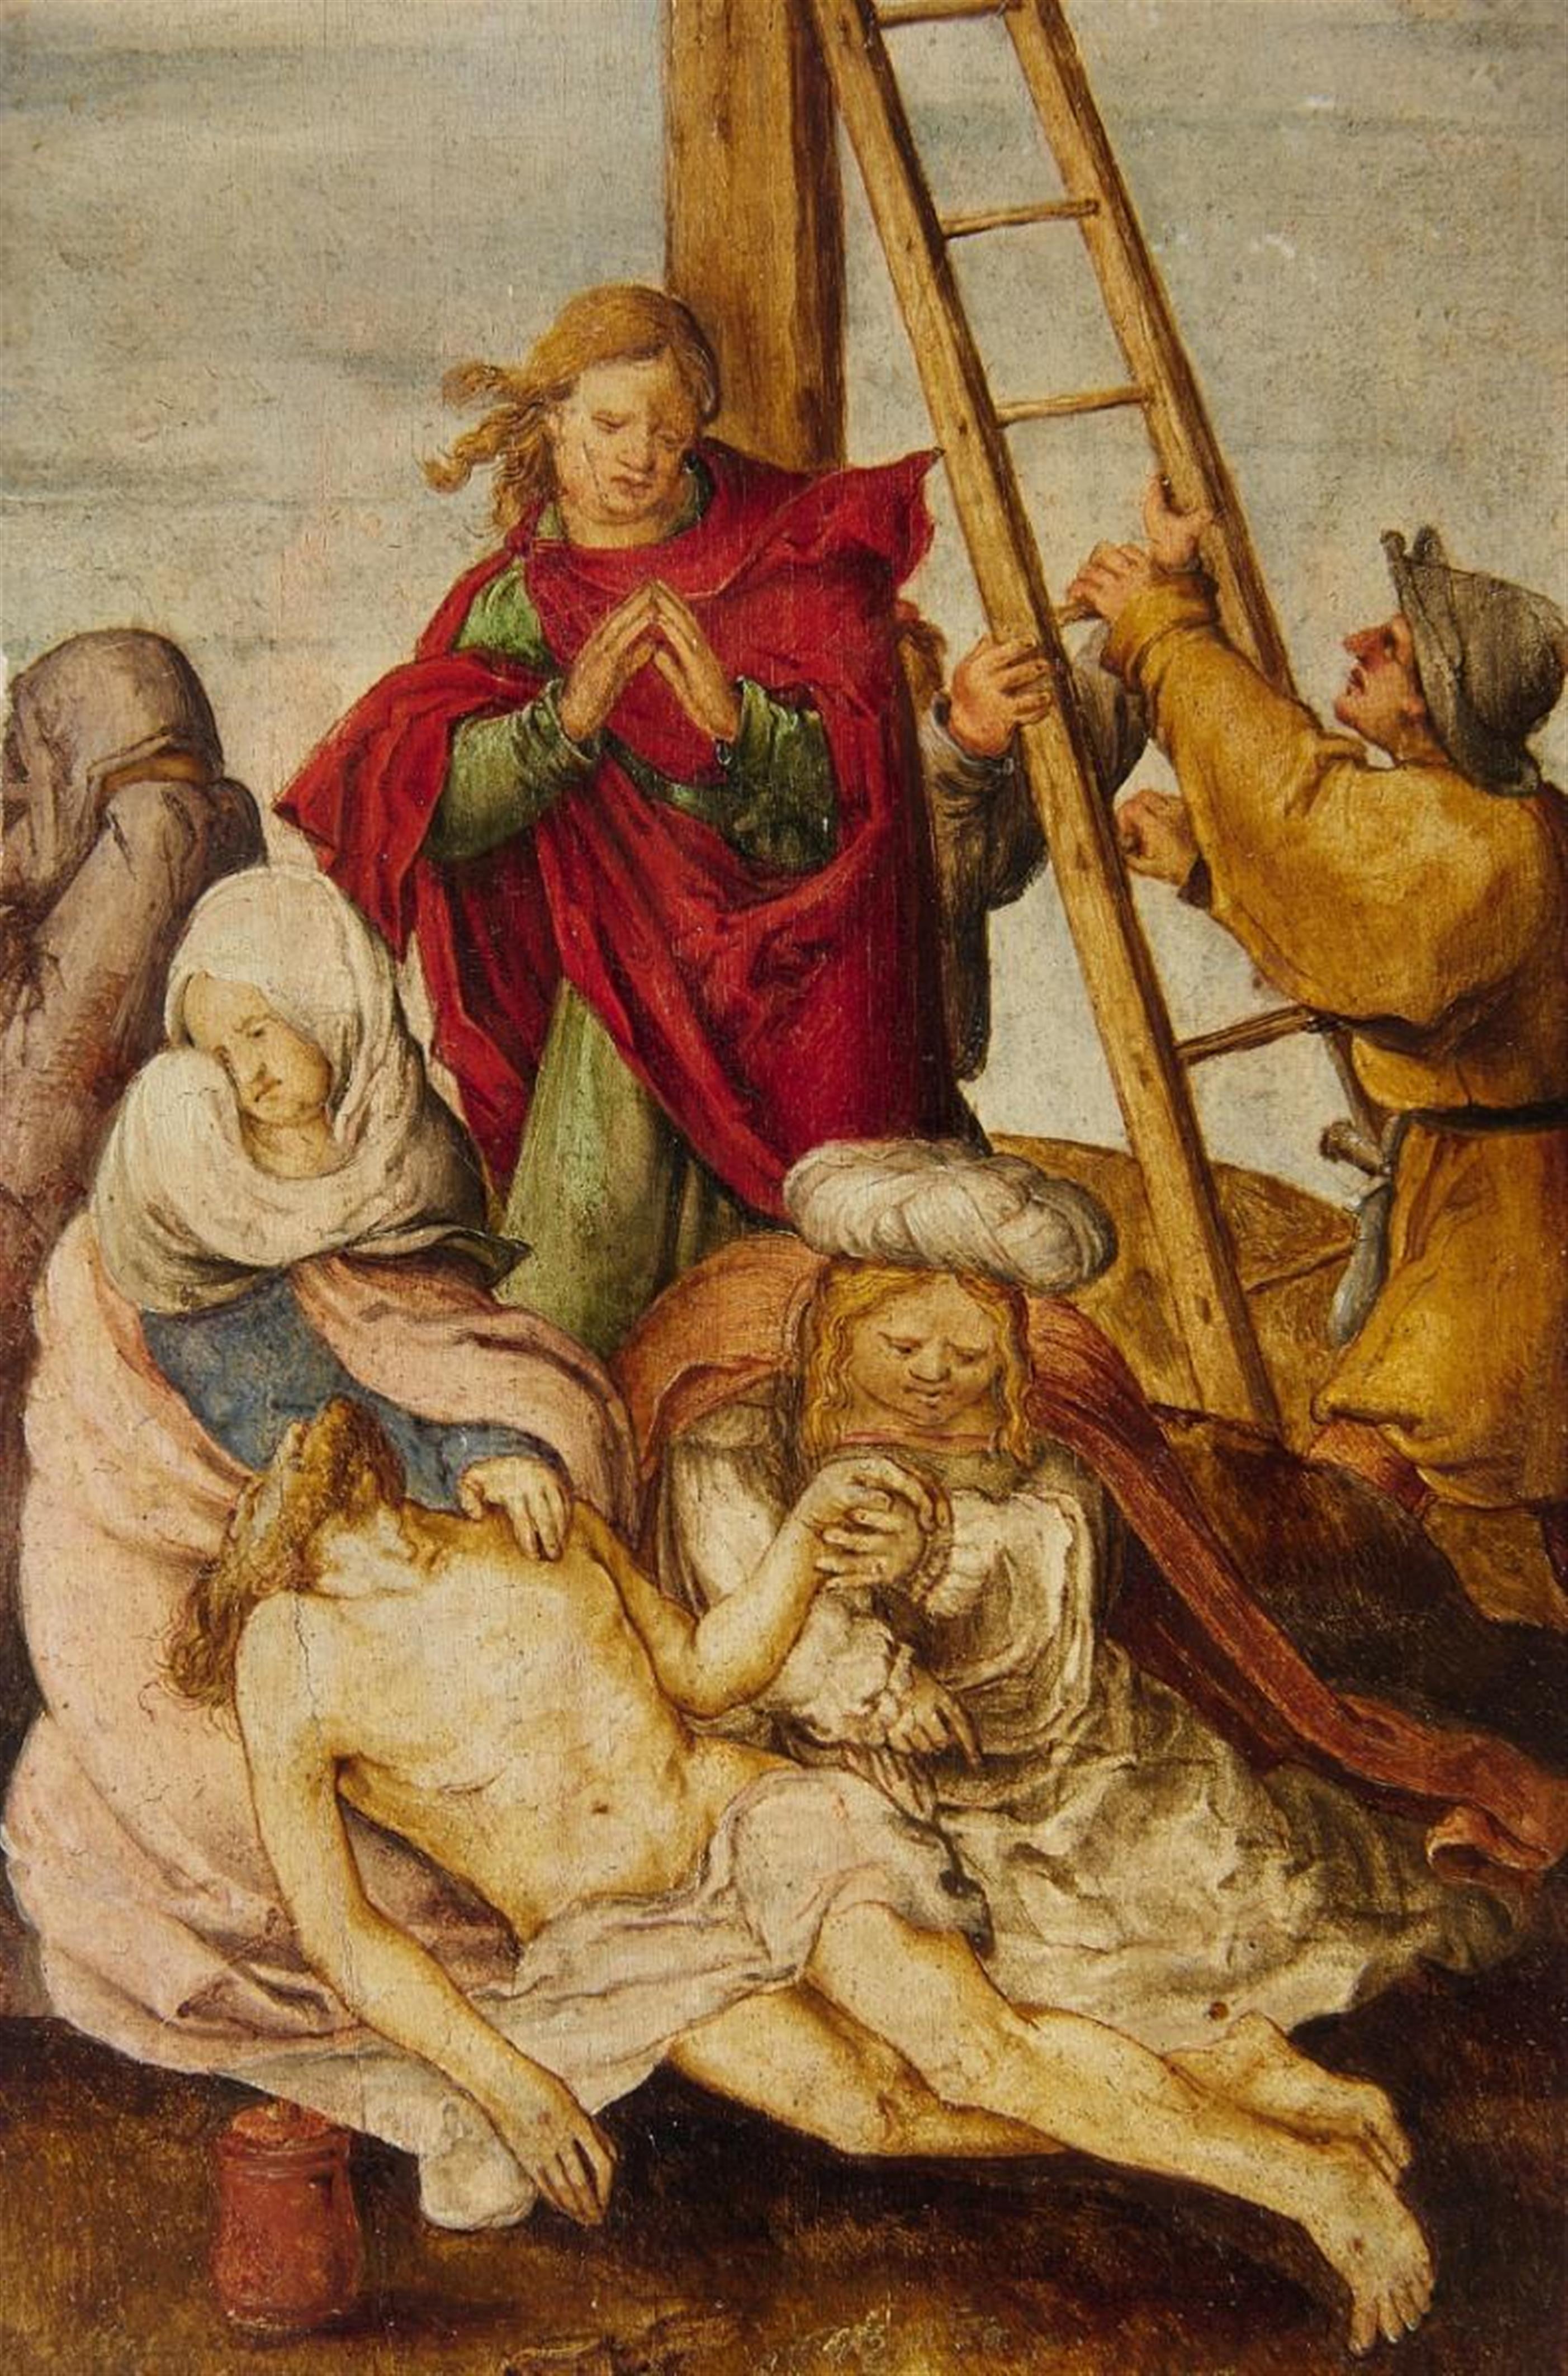 Netherlandish School of the 16th century - The Deposition of Christ - image-1